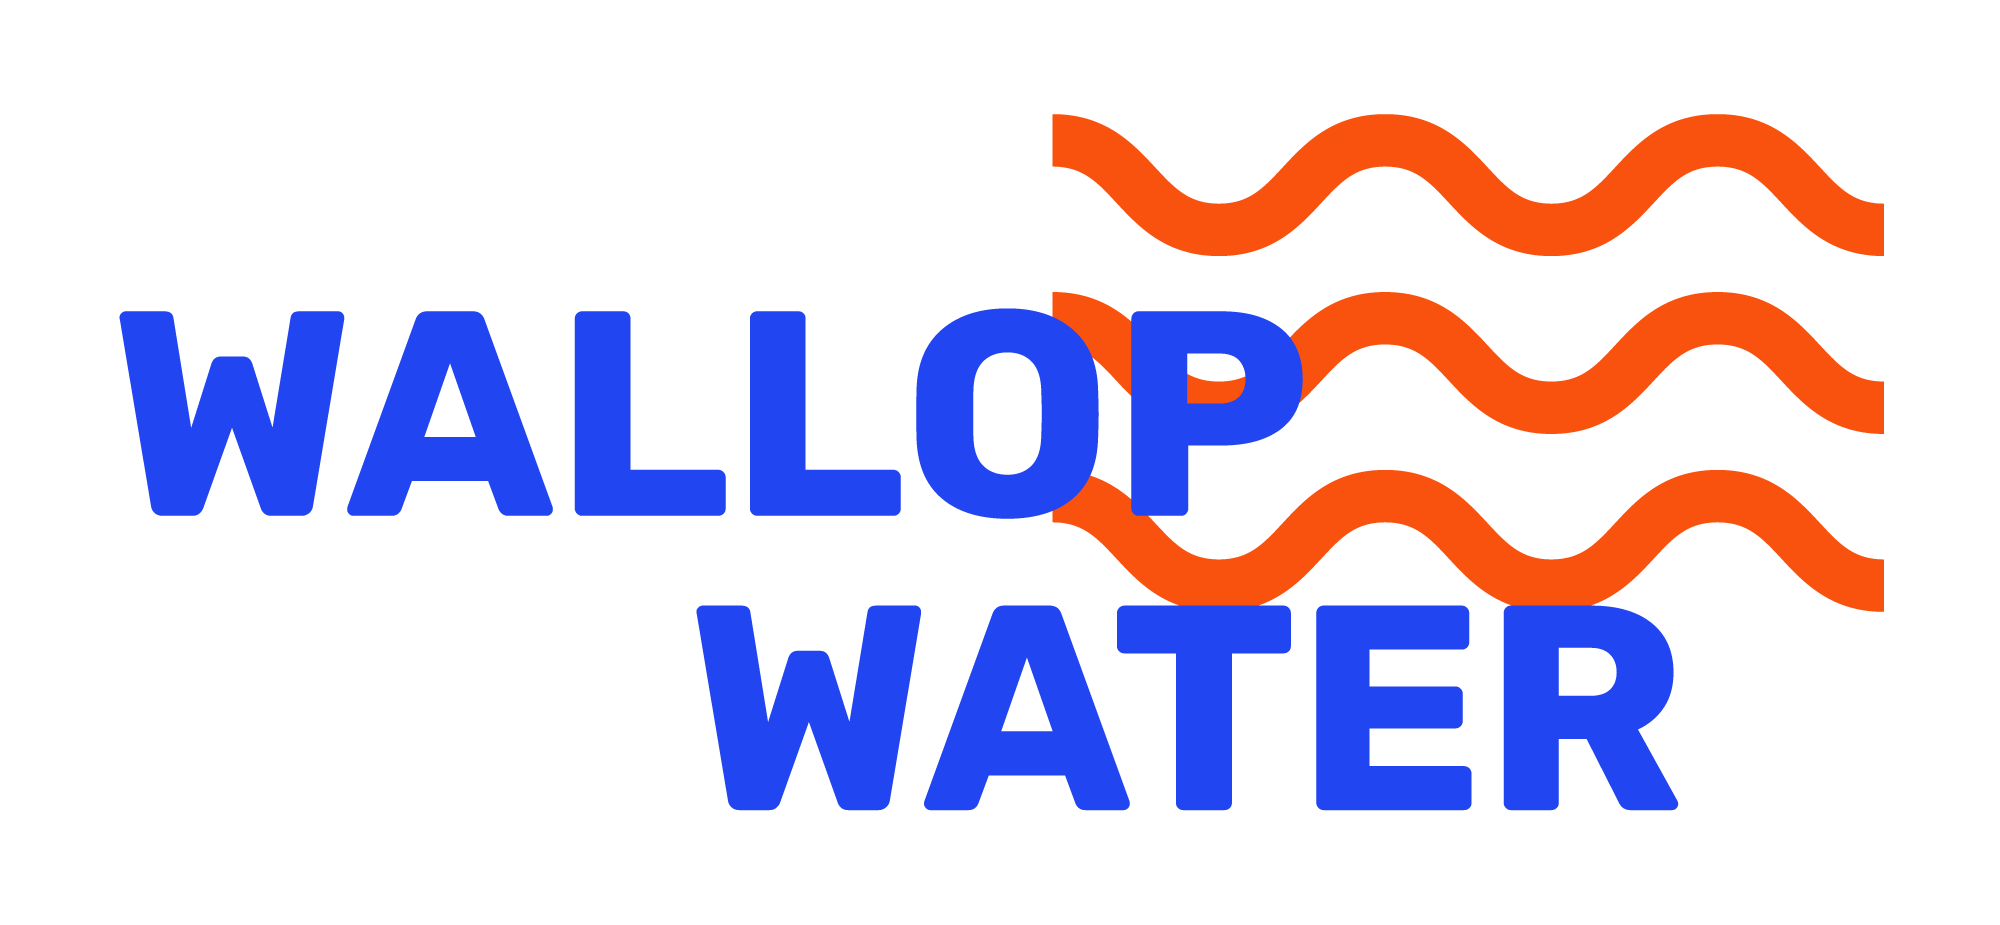 wallop water